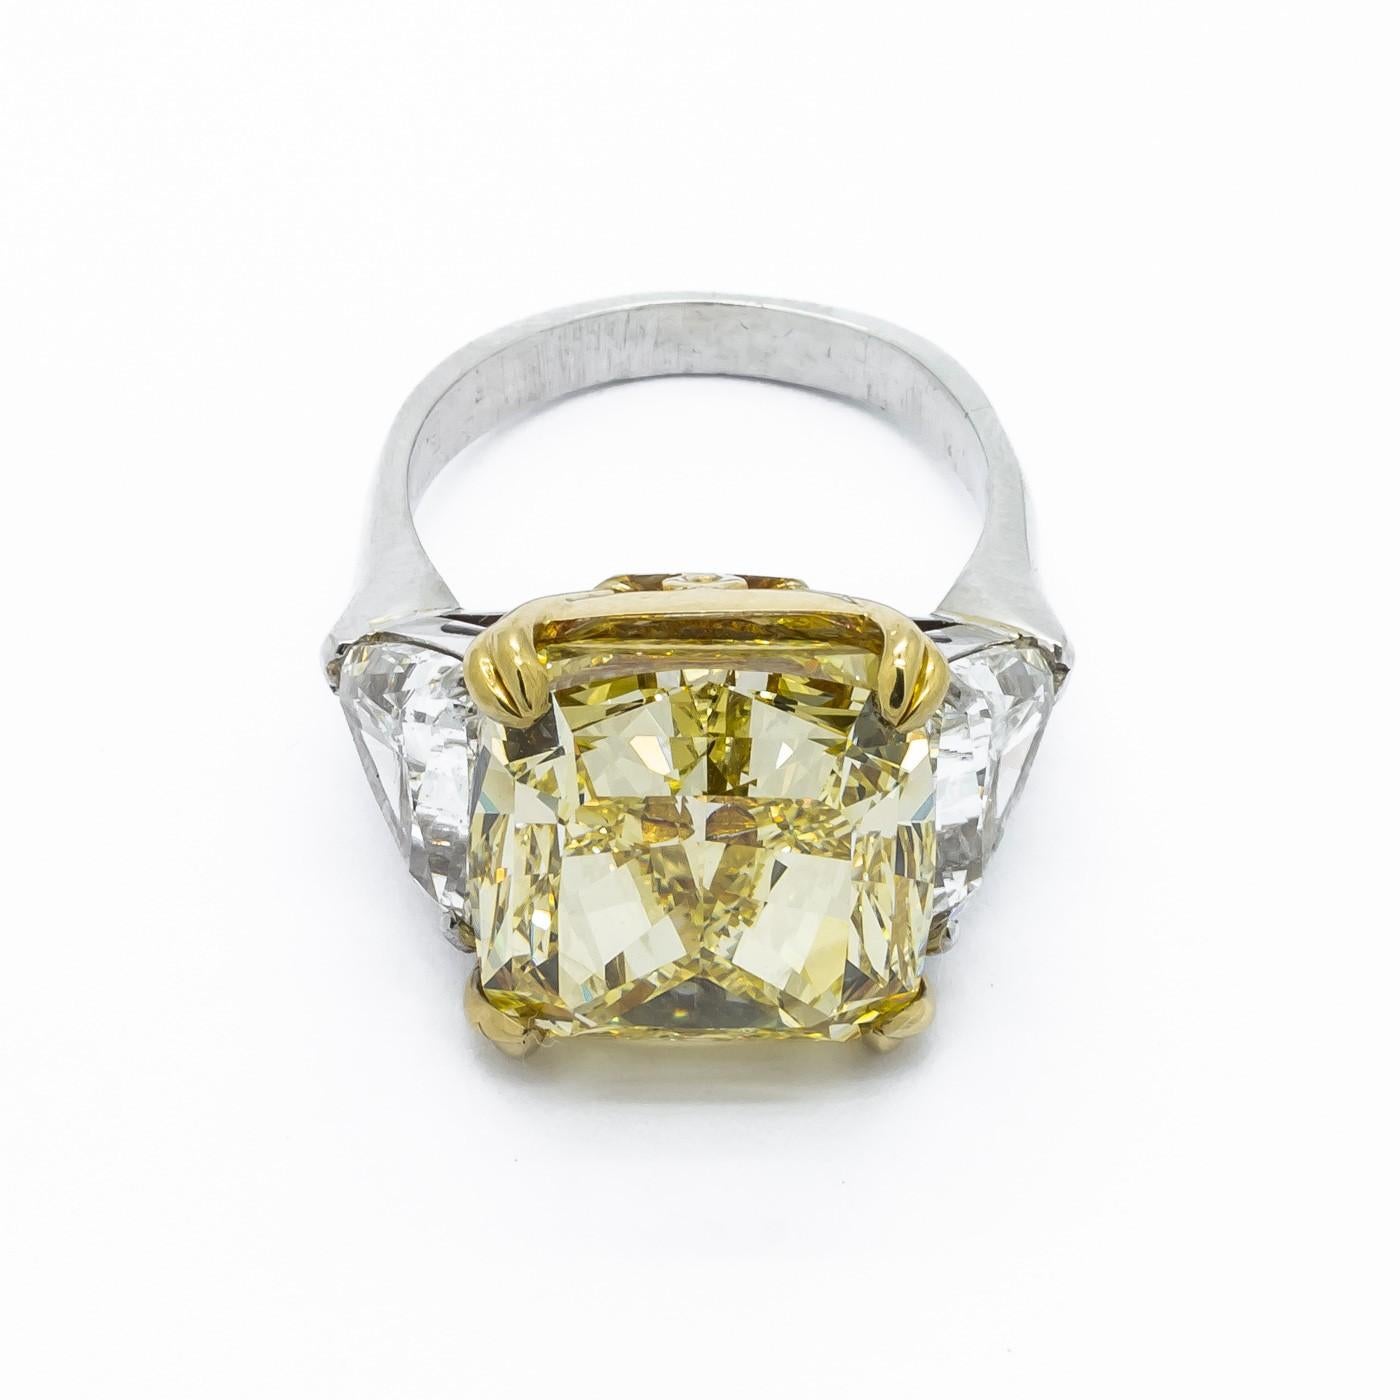 Cushion Cut Fancy Intense Yellow Diamond Ring, Platinum and Gold, 14.51 Carats